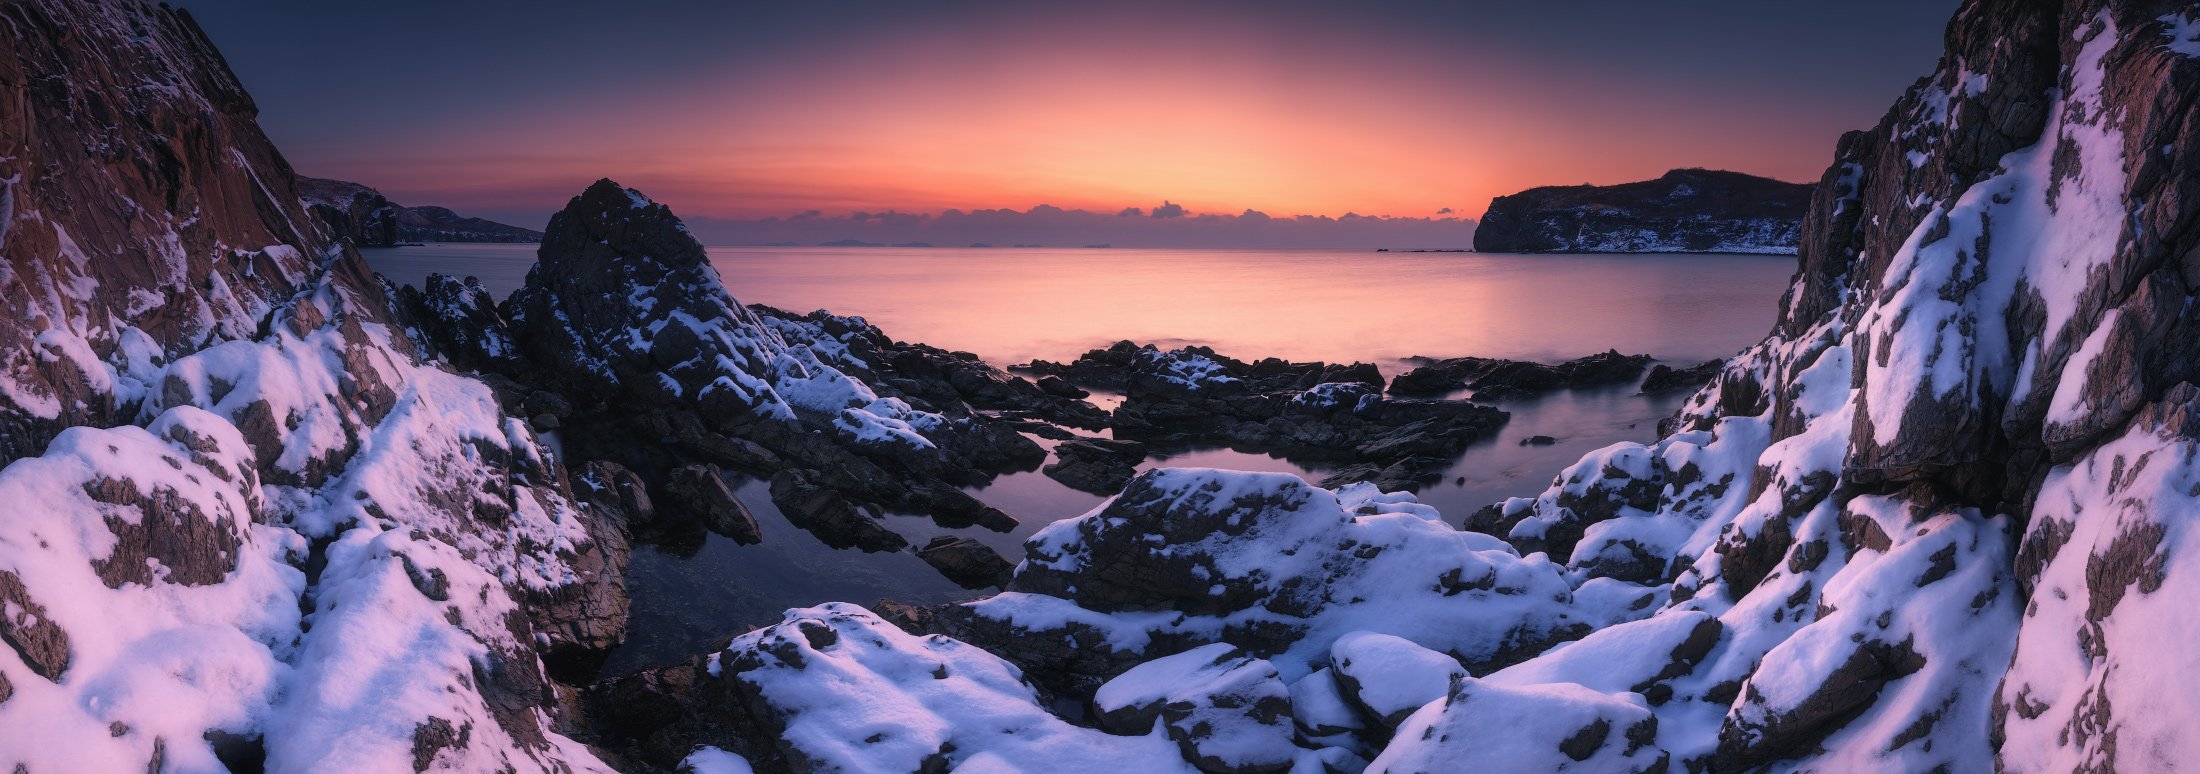 панорама, море, снег, скалы, утро, восход, Андрей Кровлин